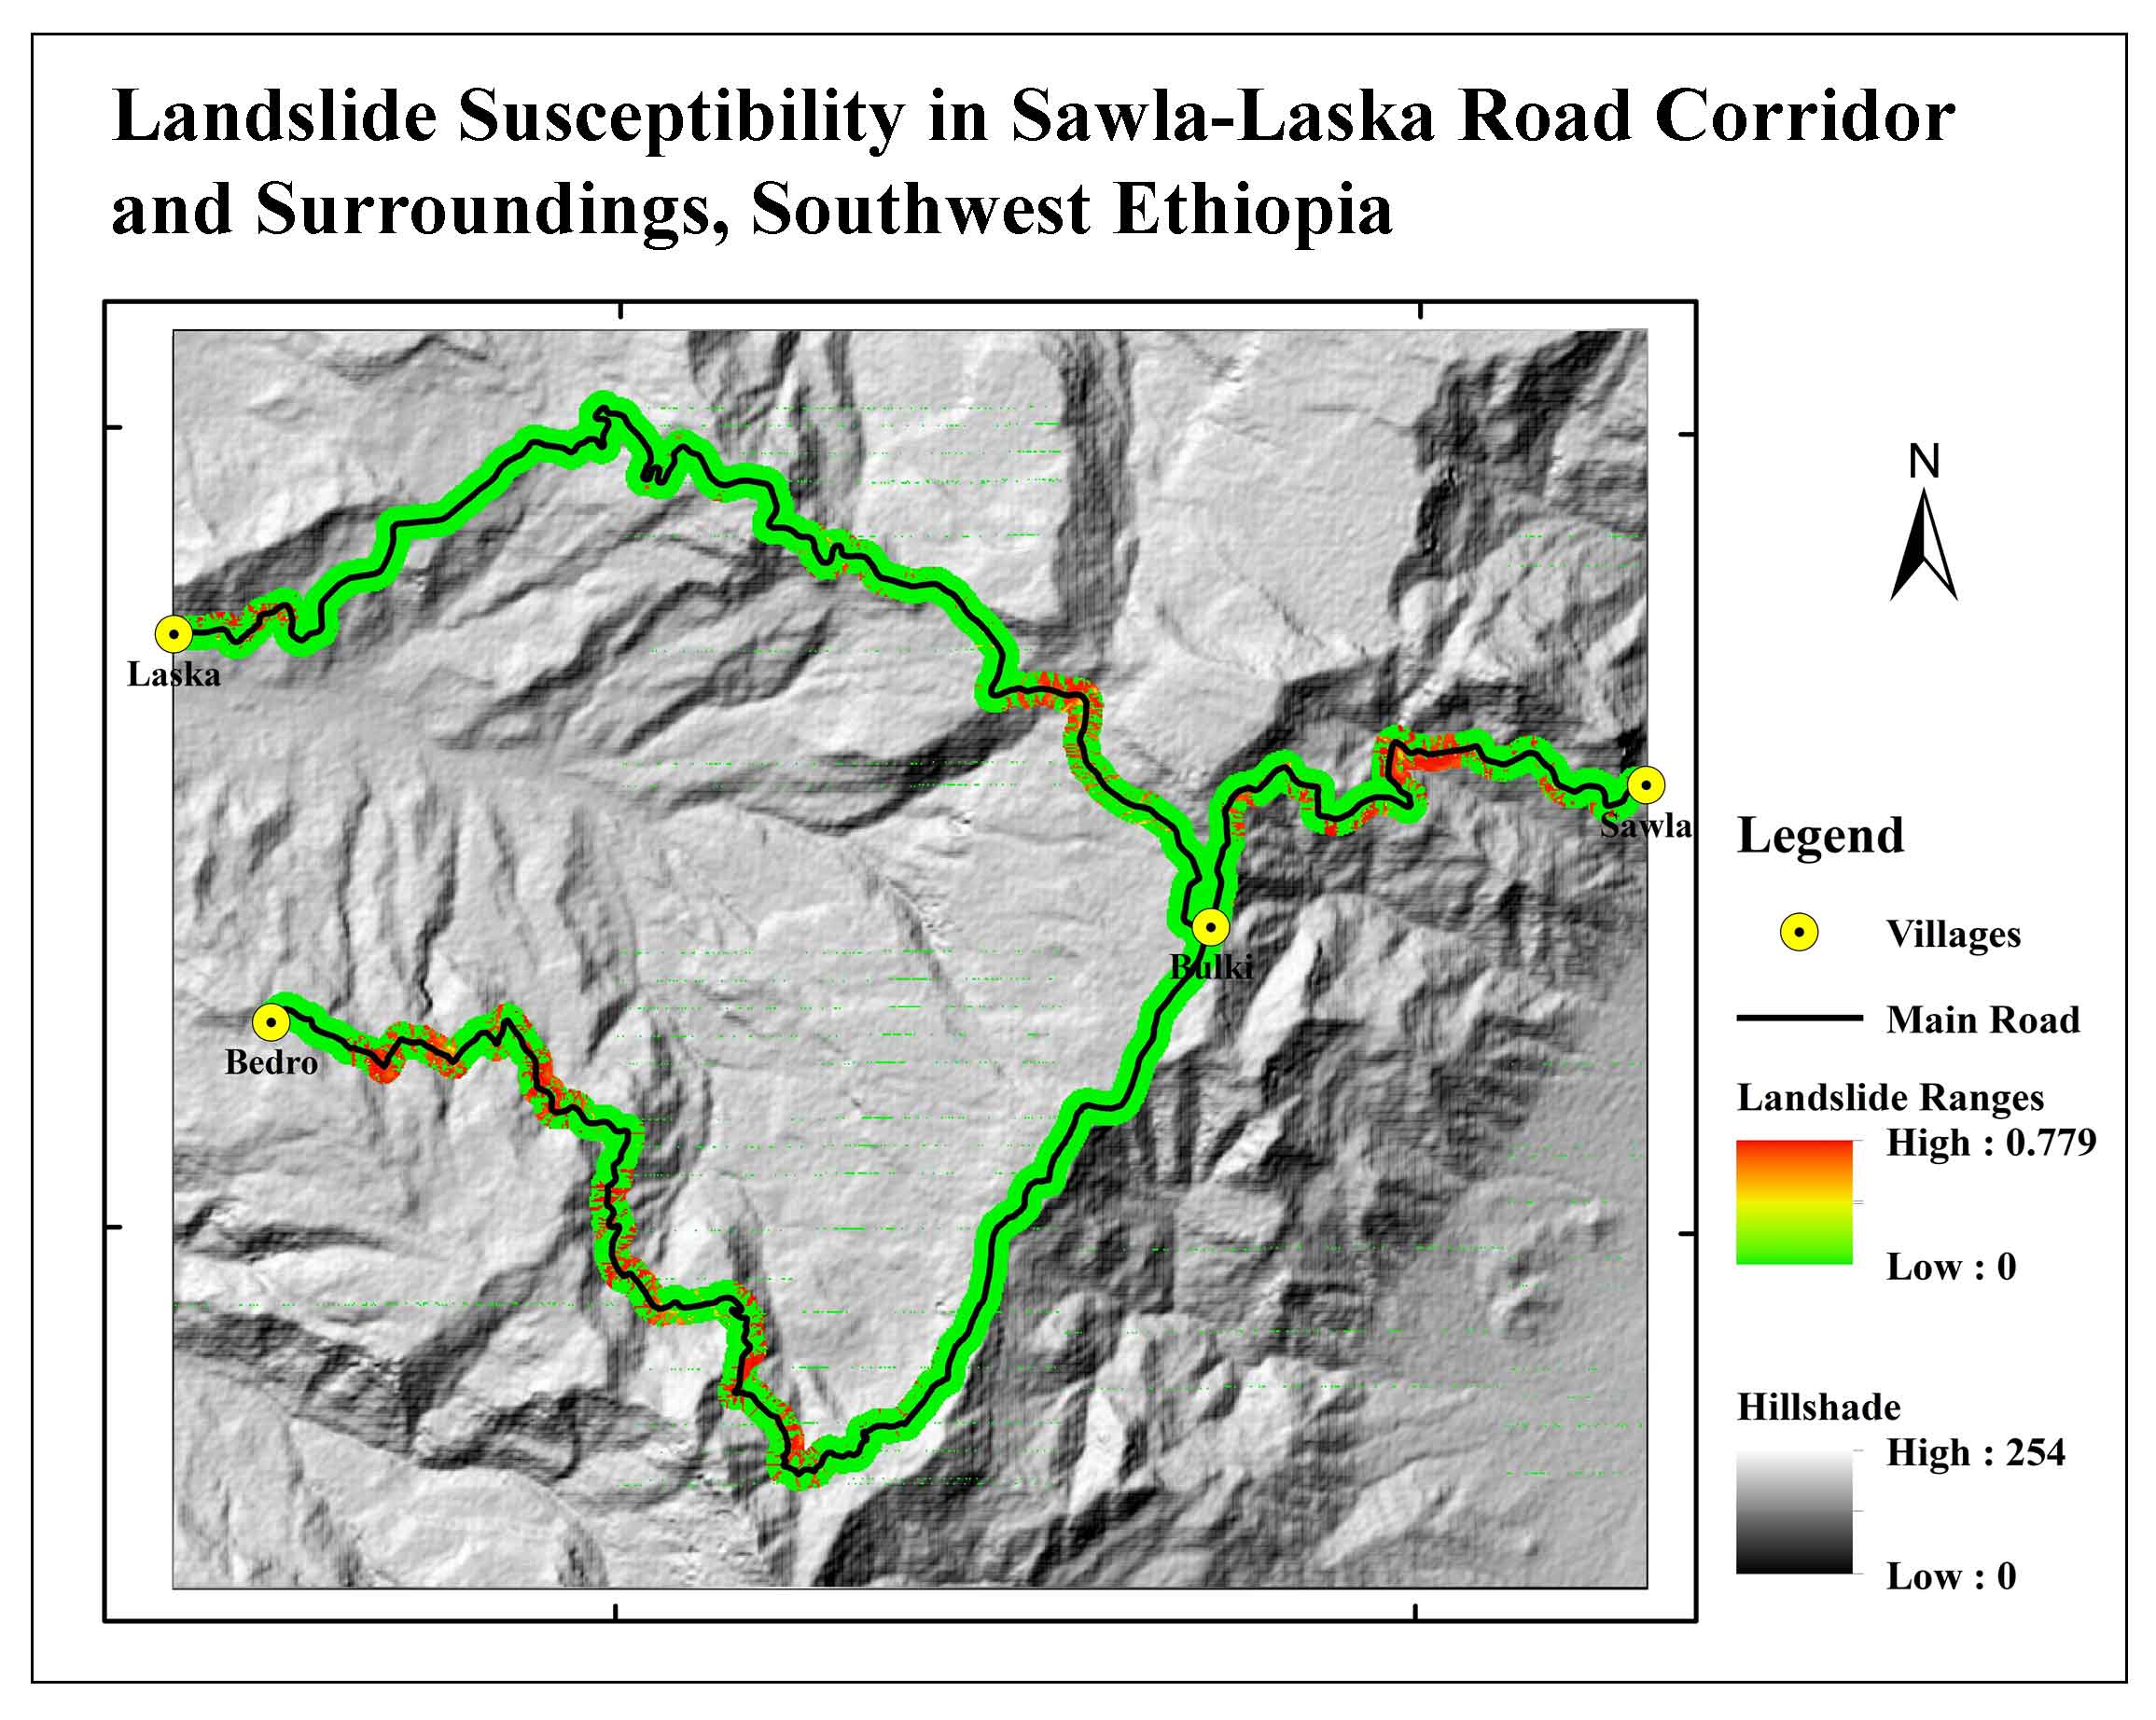 Optimizing Landslide Susceptibility Model Using Artificial Neural Network (ANN) Approach in Sawla-Laska Road Corridor and Surroundings, Southwest Ethiopia